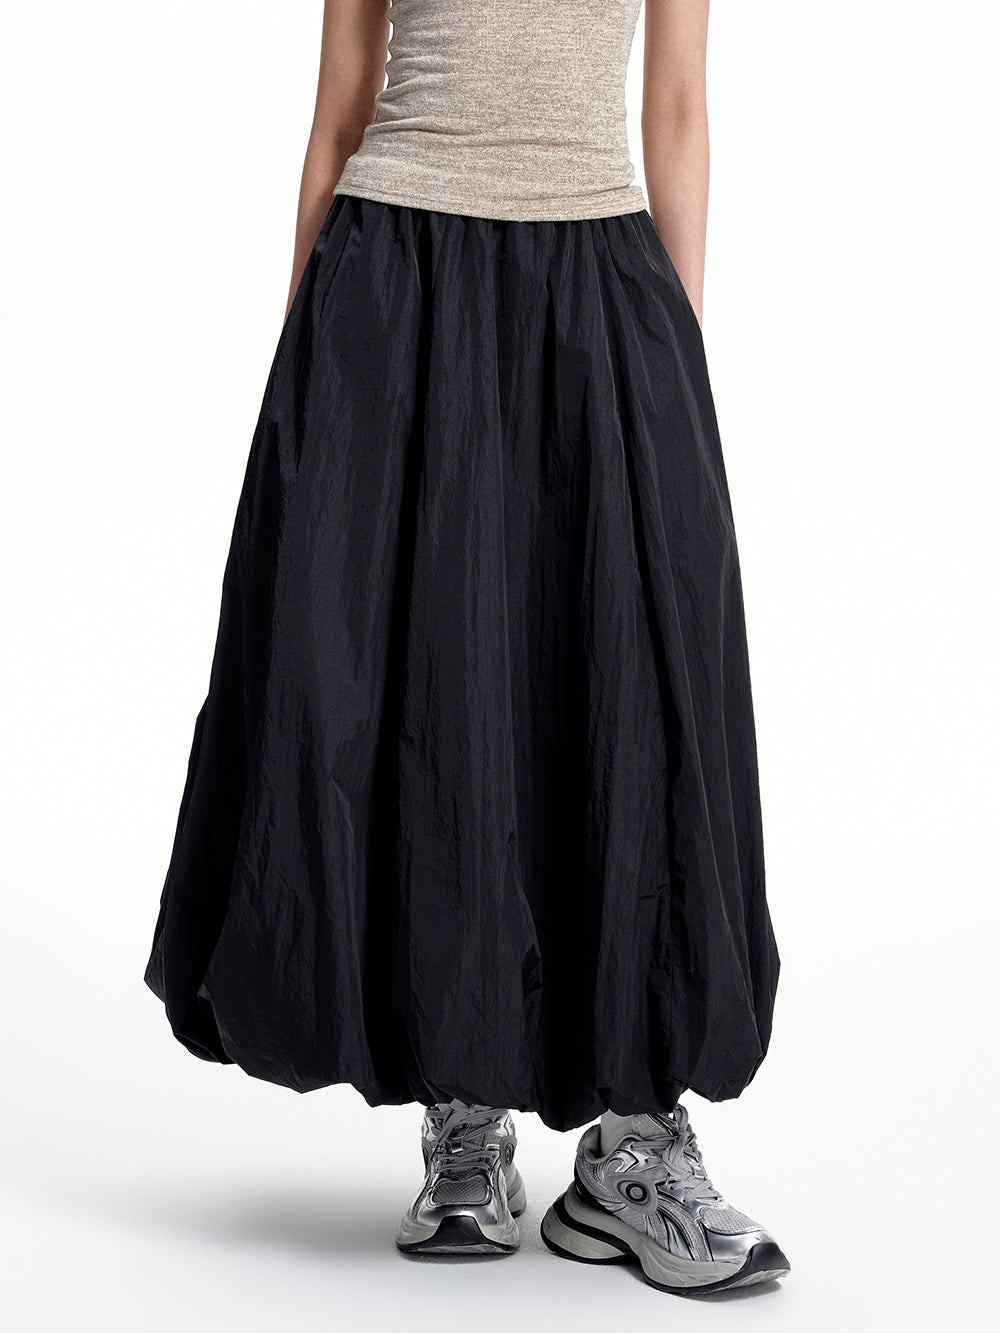 MUKTANK x WESAME A-line Black Midi Skirt with Elastic Waist and Ultra-Thin Flared Hem